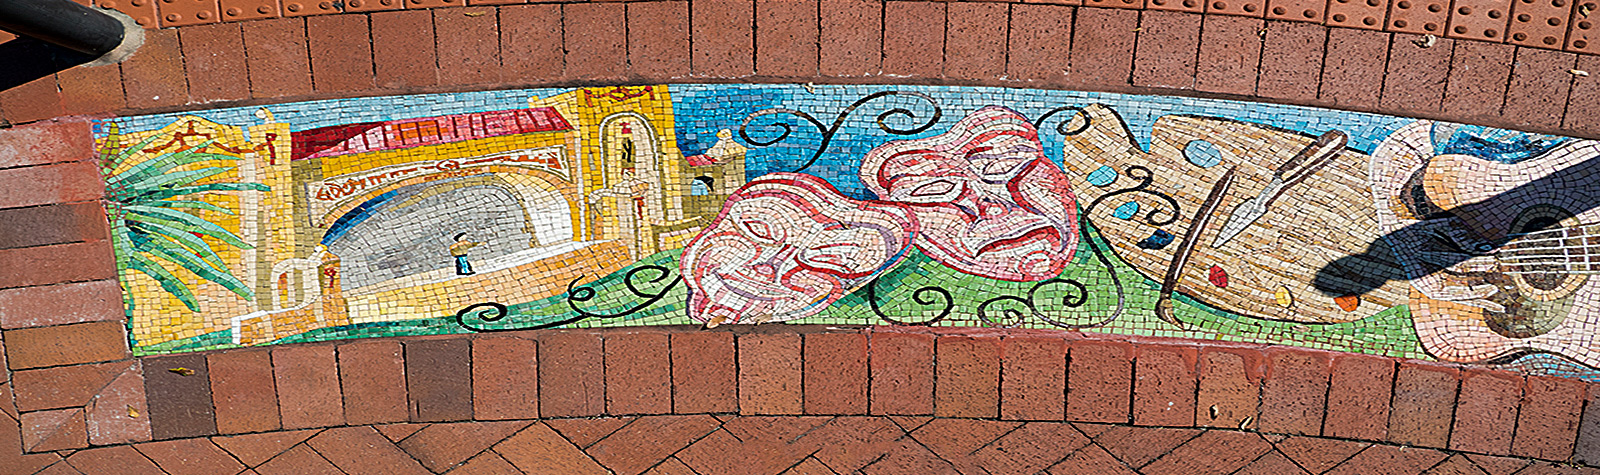 street mosaic illustrating the arts